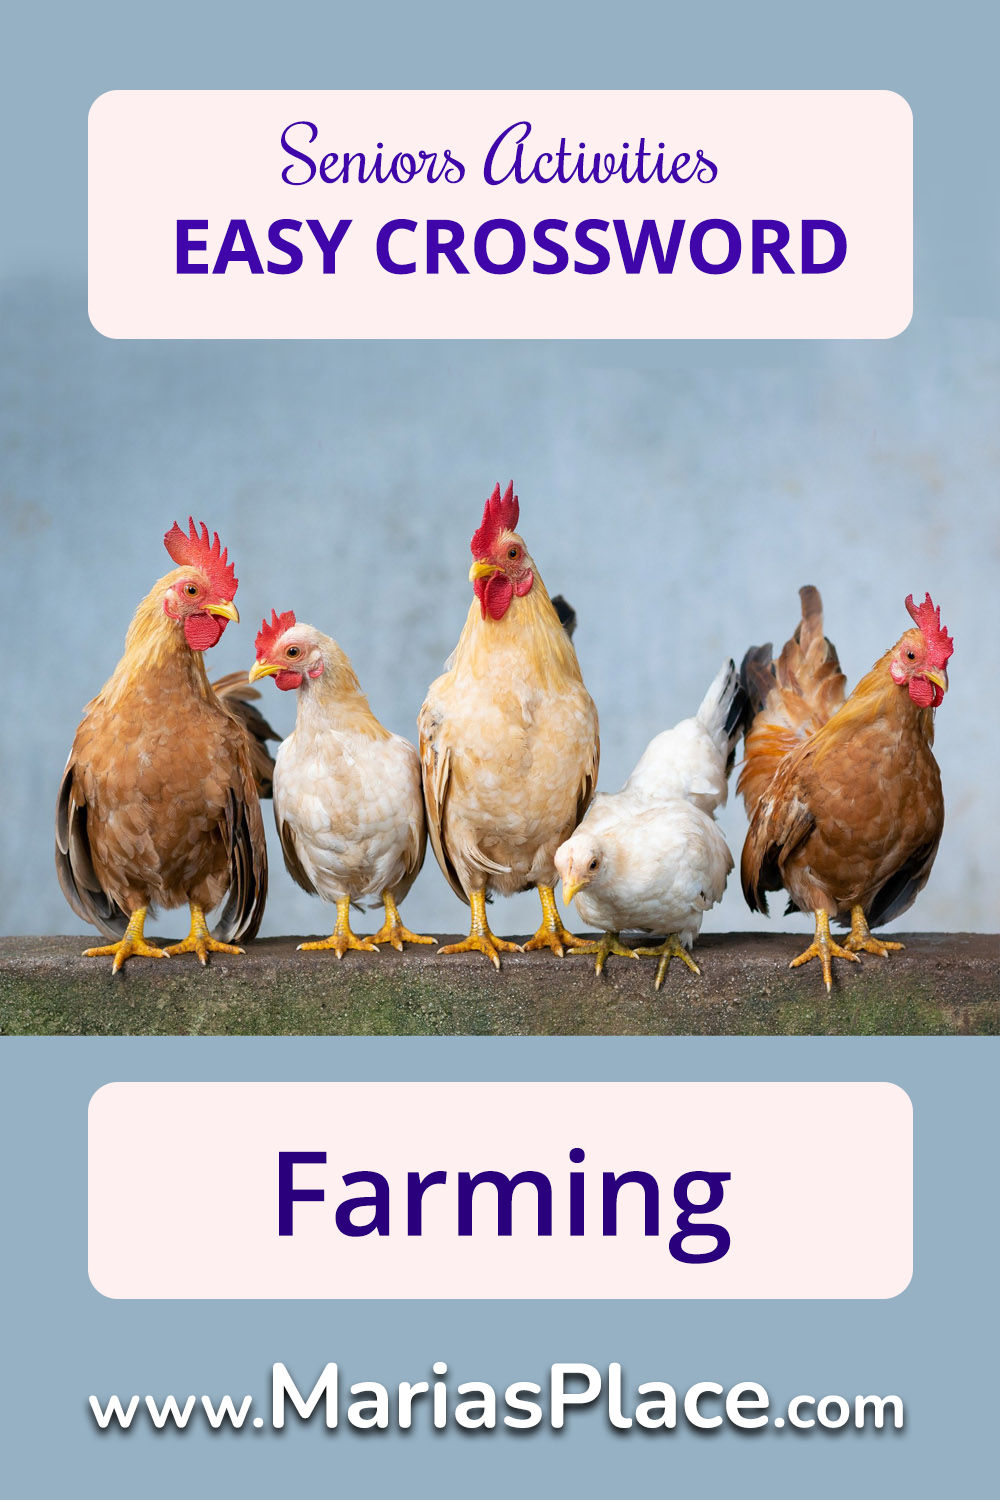 Crossword #1, Farming